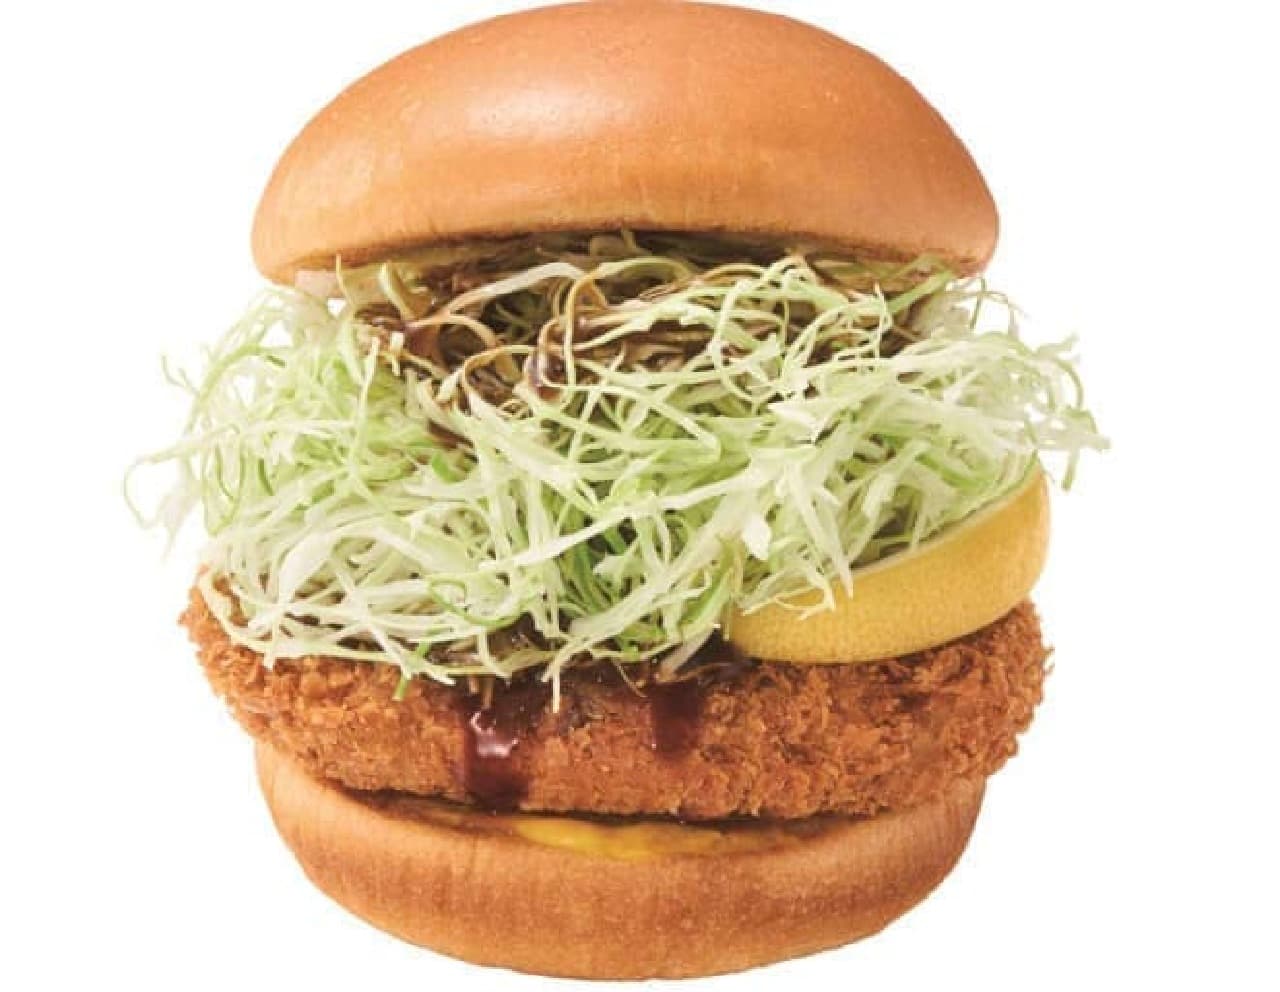 "Shinshu pork minced meat burger with lemon" on moss